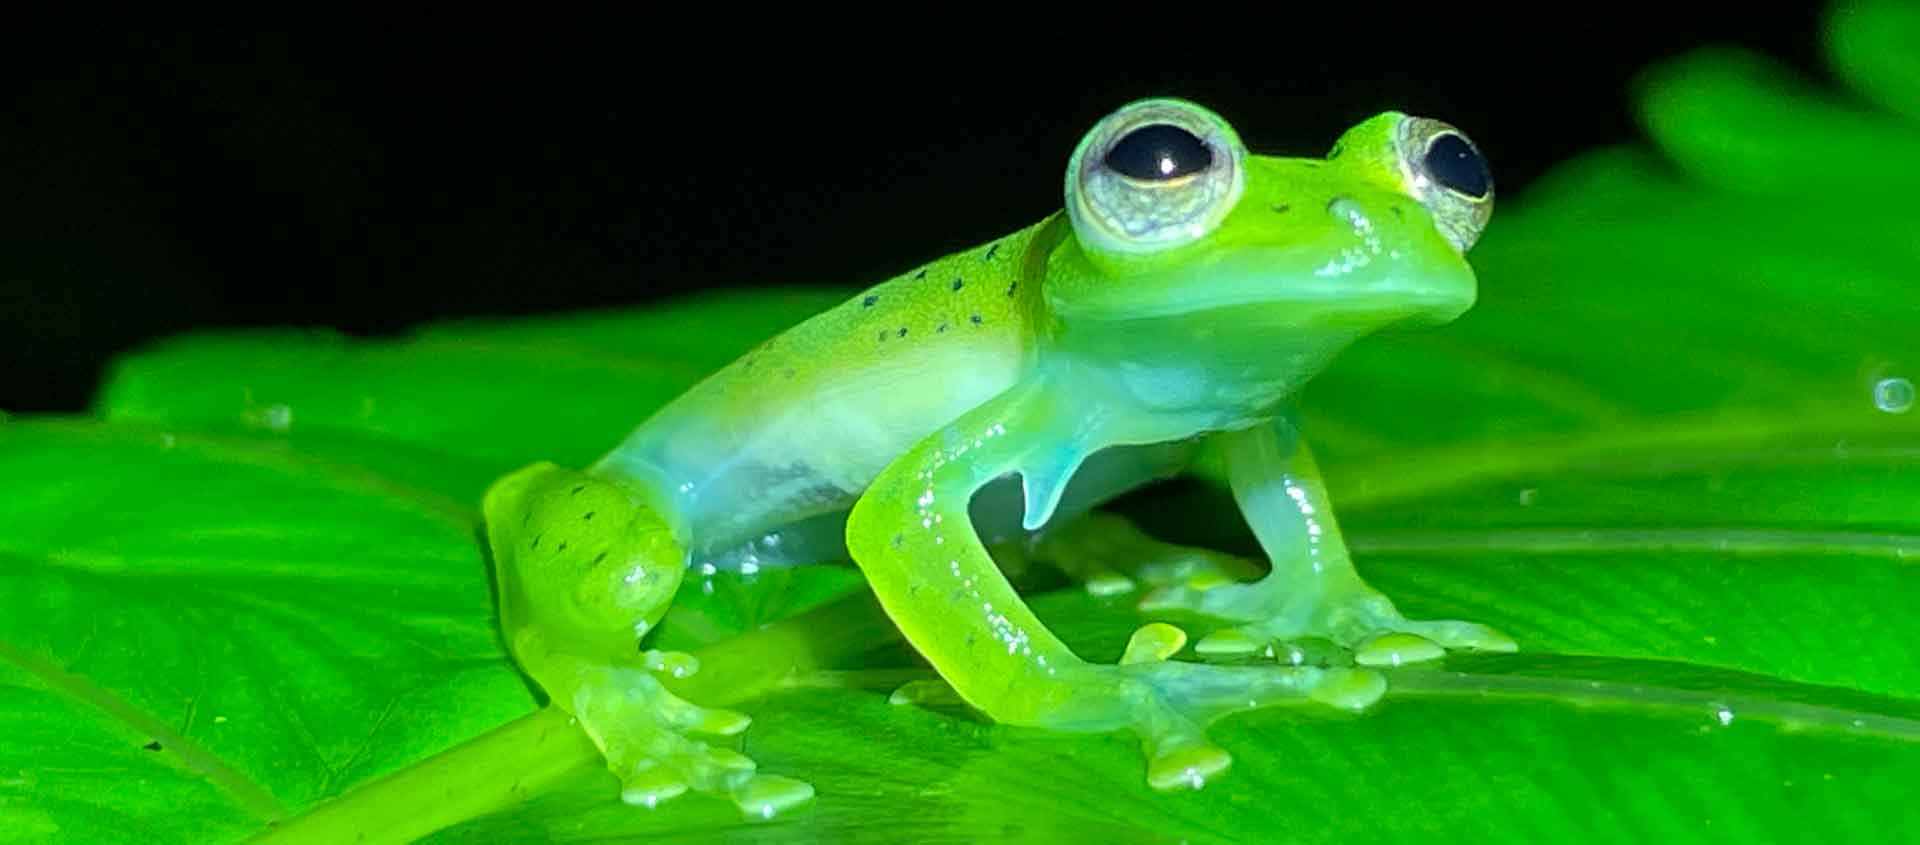 Galápagos Islands and Mashpi Reserve image of Glass Frog